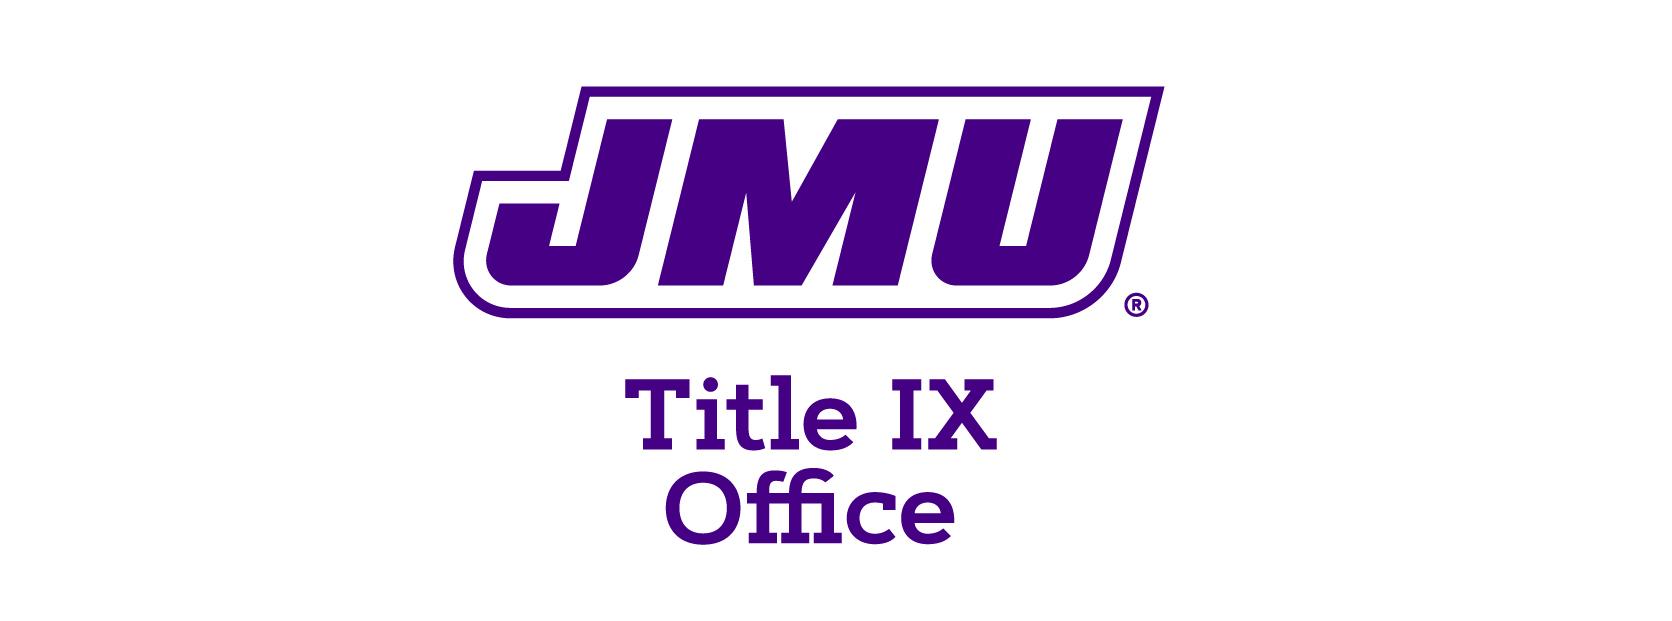 jmu-title ix office-vert-purple